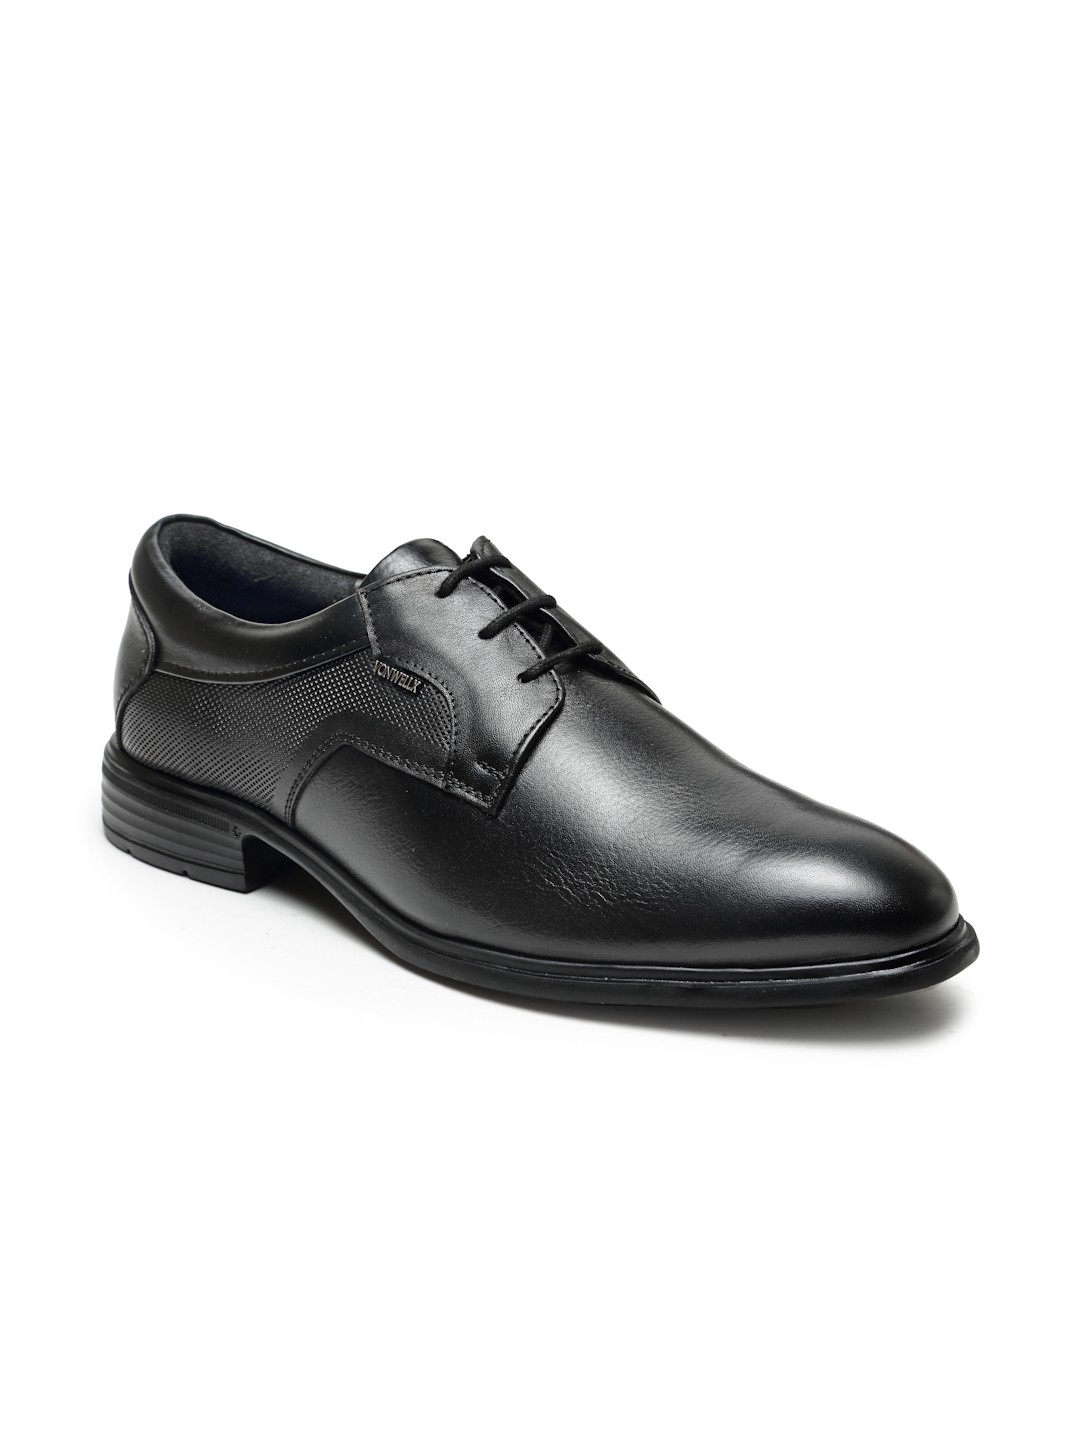 Buy VON WELLX GERMANY comfort men's black formal shoes ADLER In Delhi